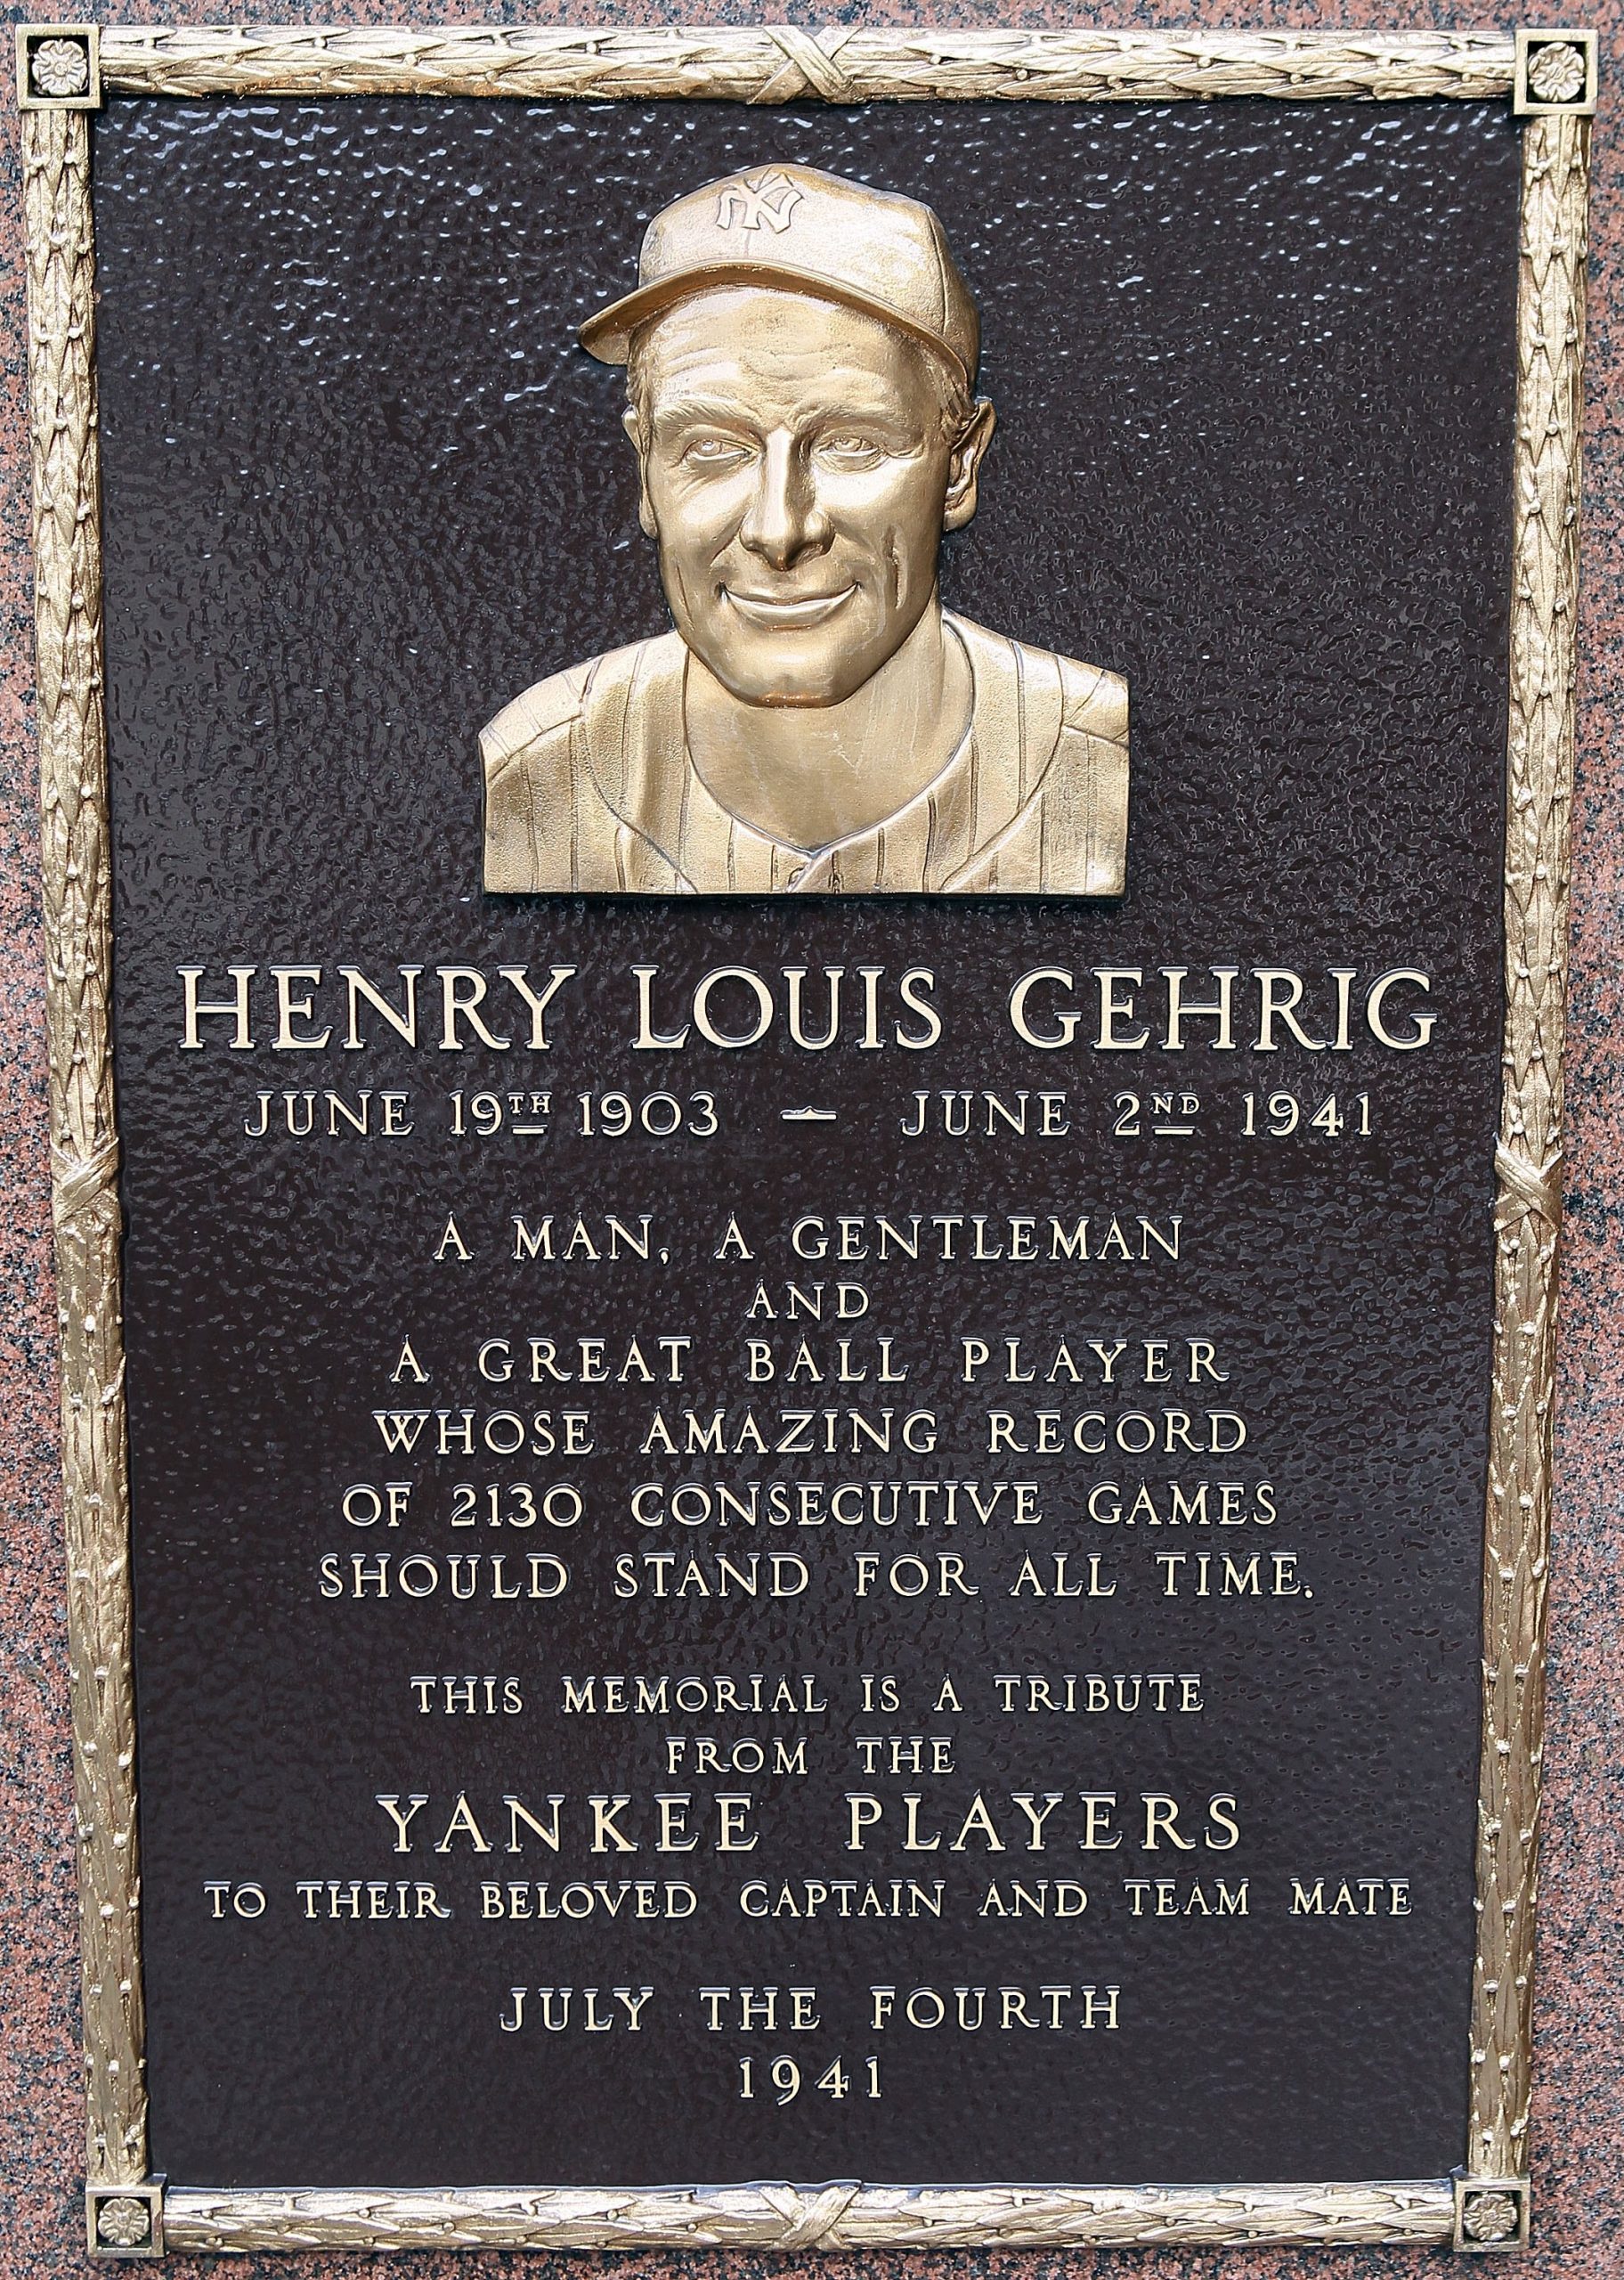 Lou Gehrig photo